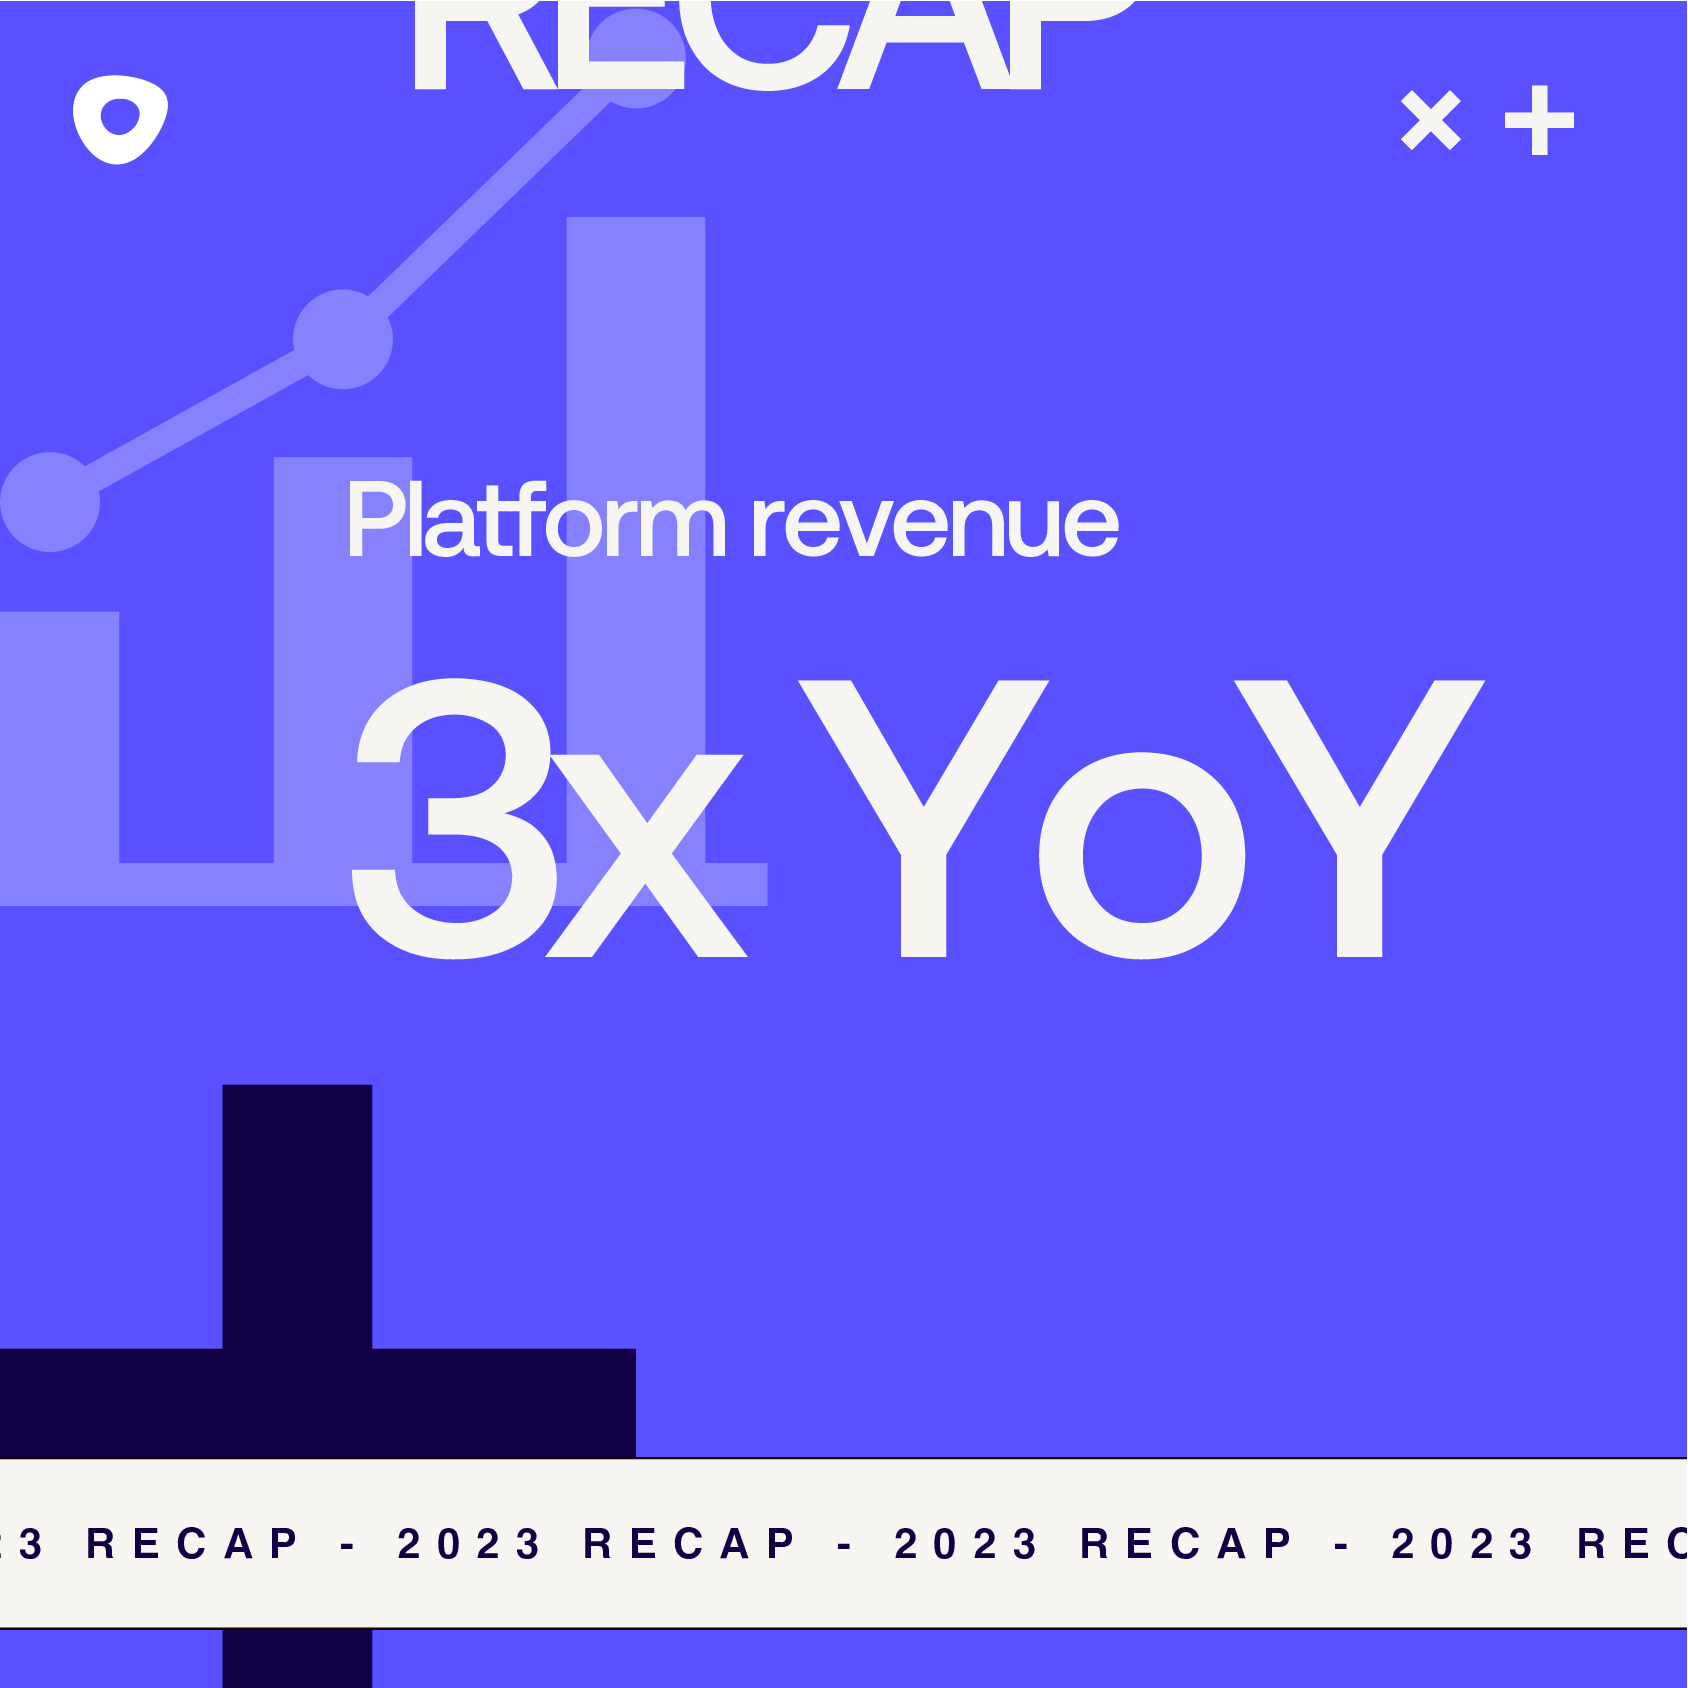 outreach 2023 recap 3x year over year platform revenue